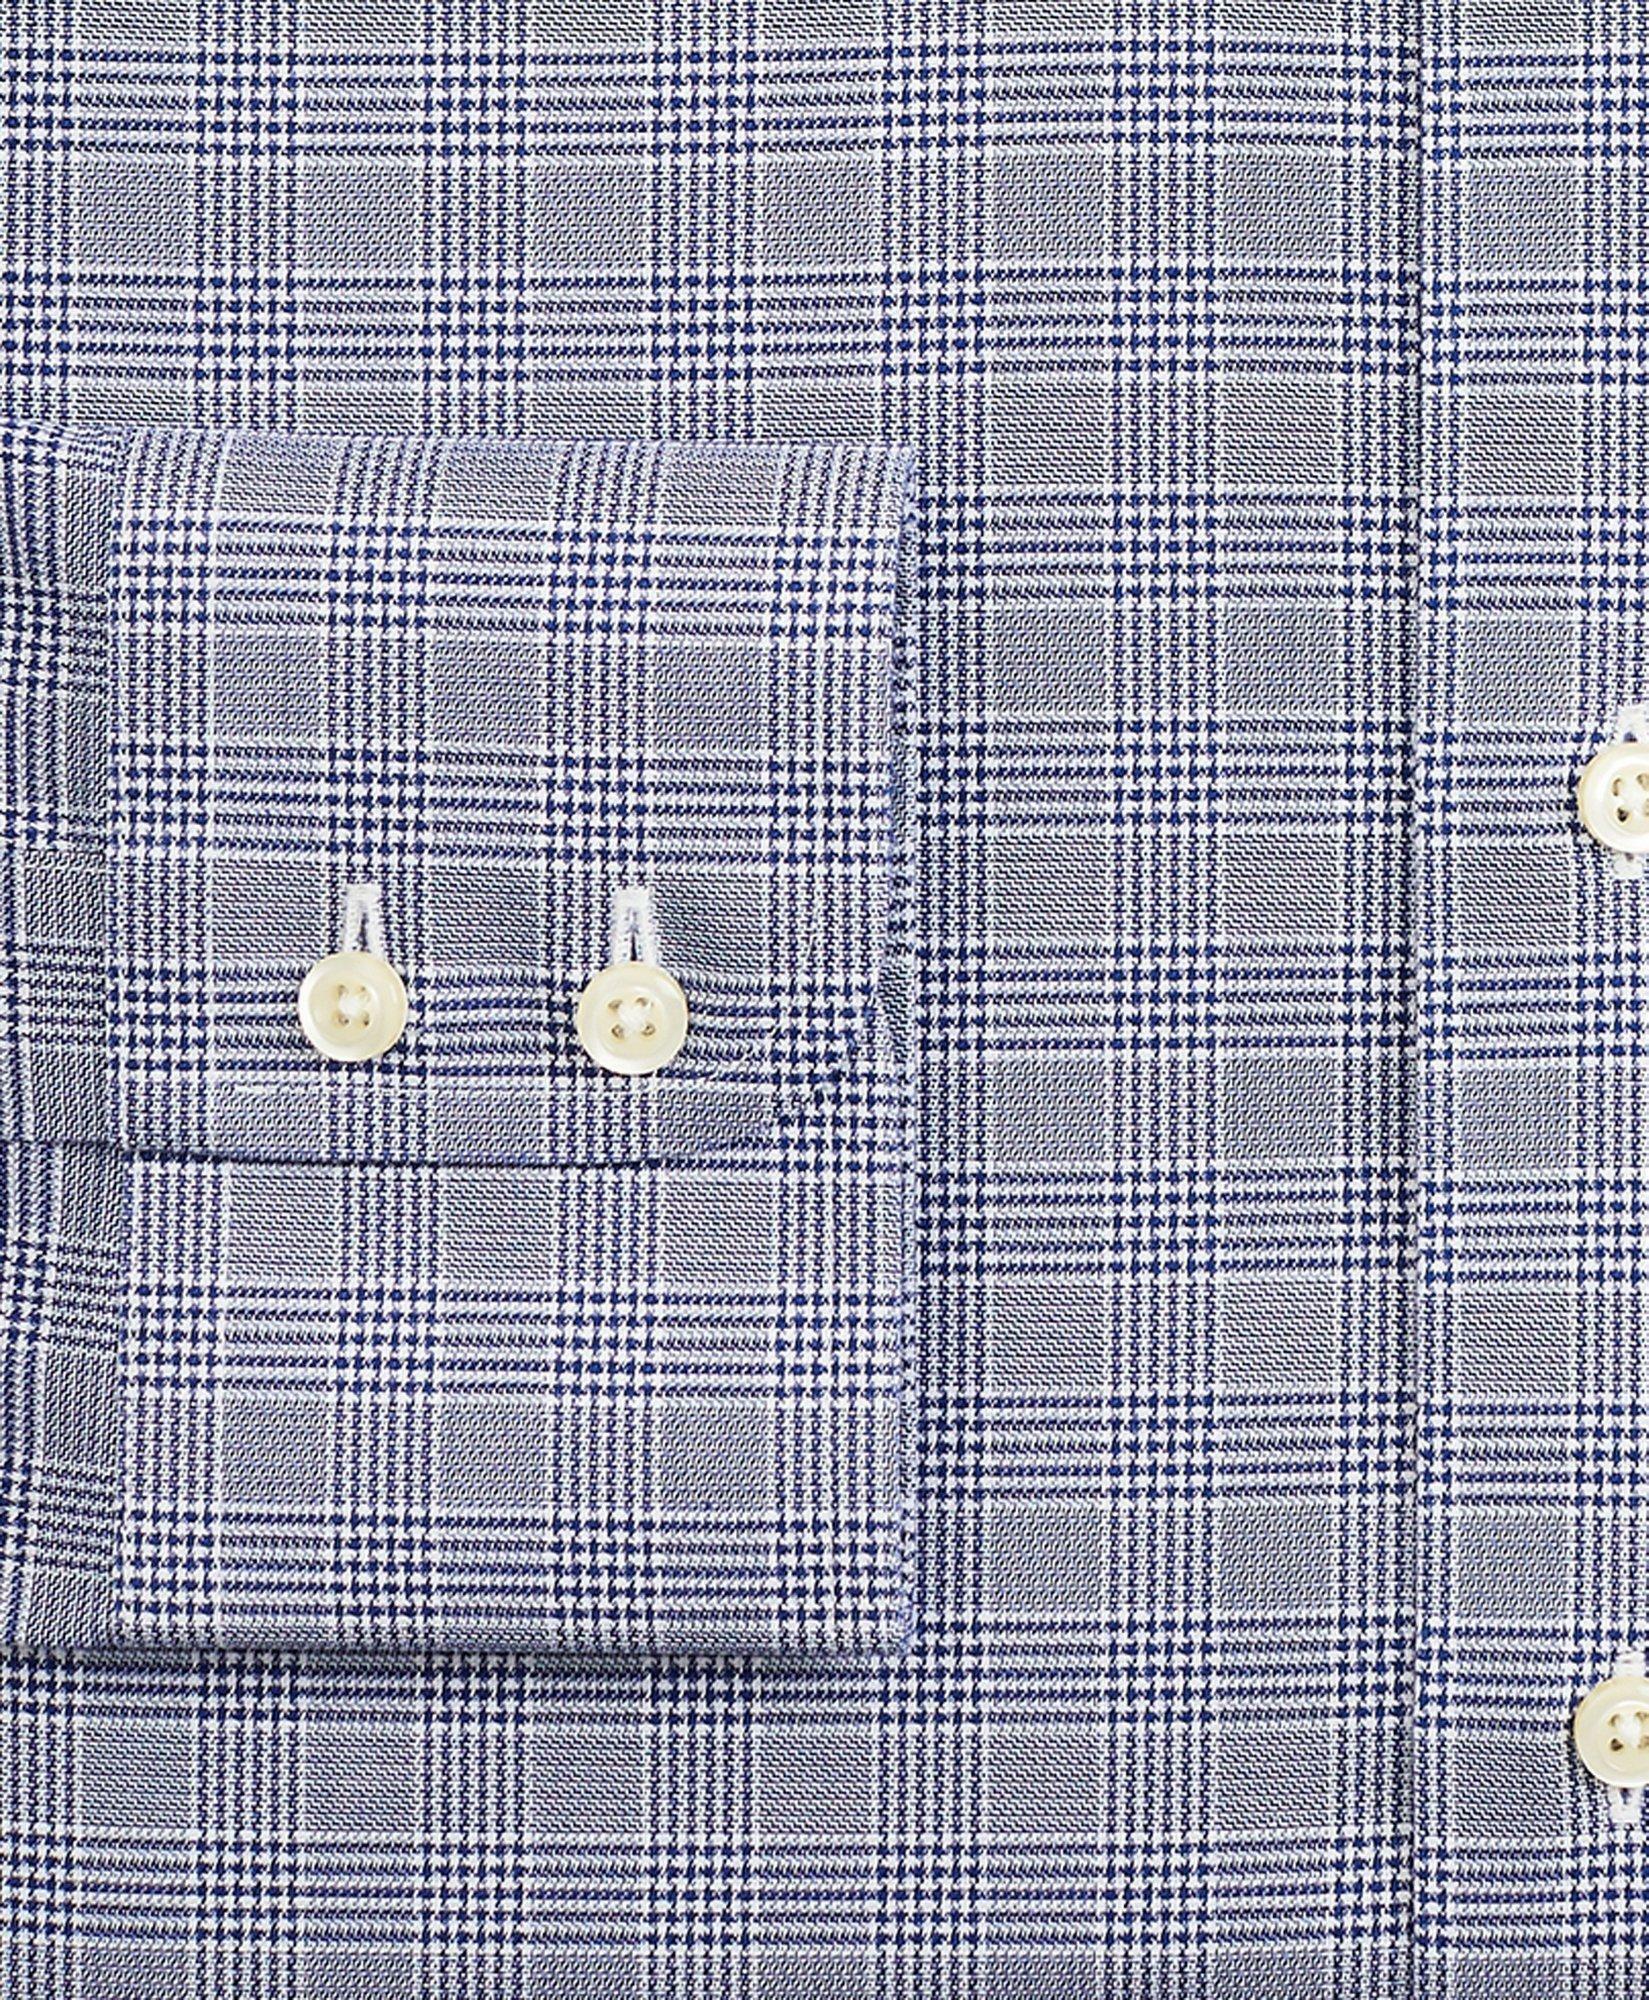 Brooks Brothers Men's Stretch Milano Slim-Fit Dress Shirt, Non-Iron Royal Oxford Button-Down Collar Glen Plaid | Navy